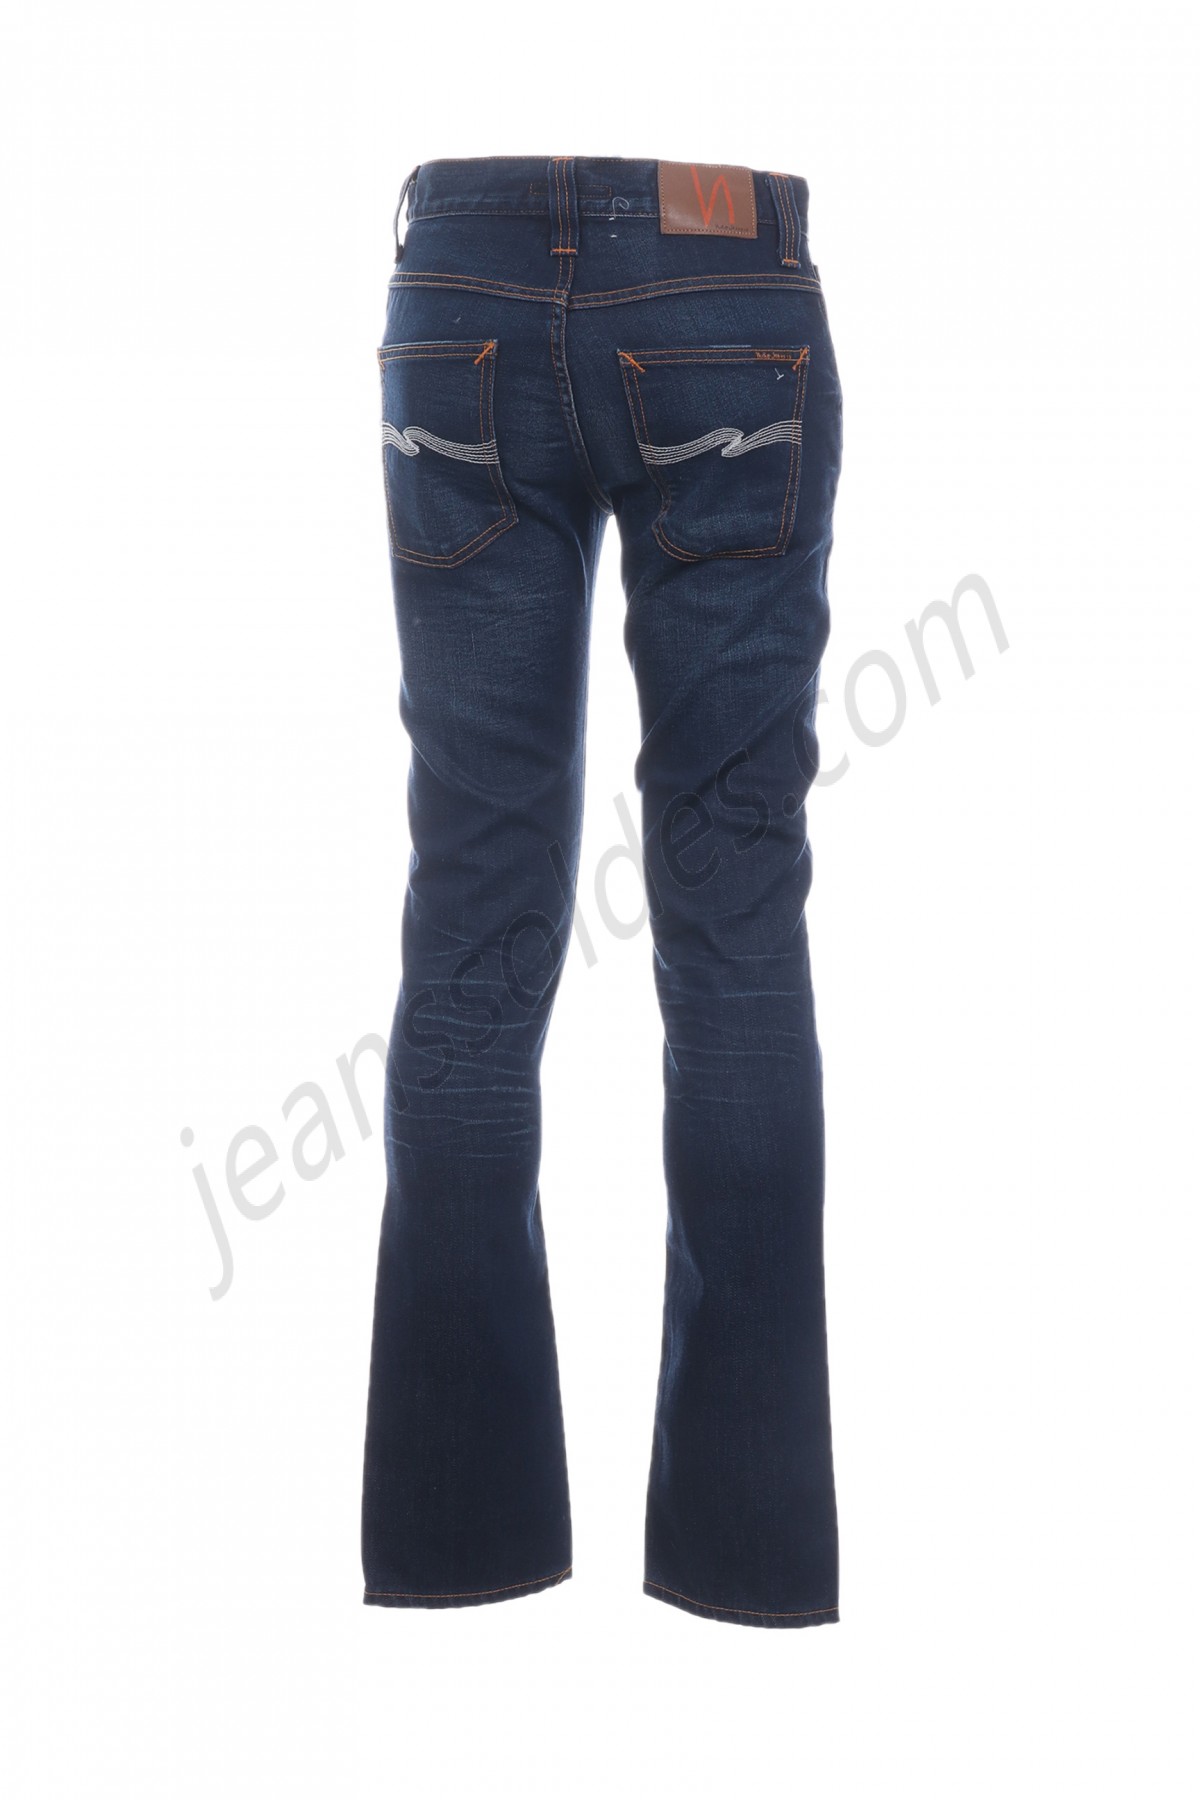 nudie jeans co-Jeans coupe slim prix d’amis - -1